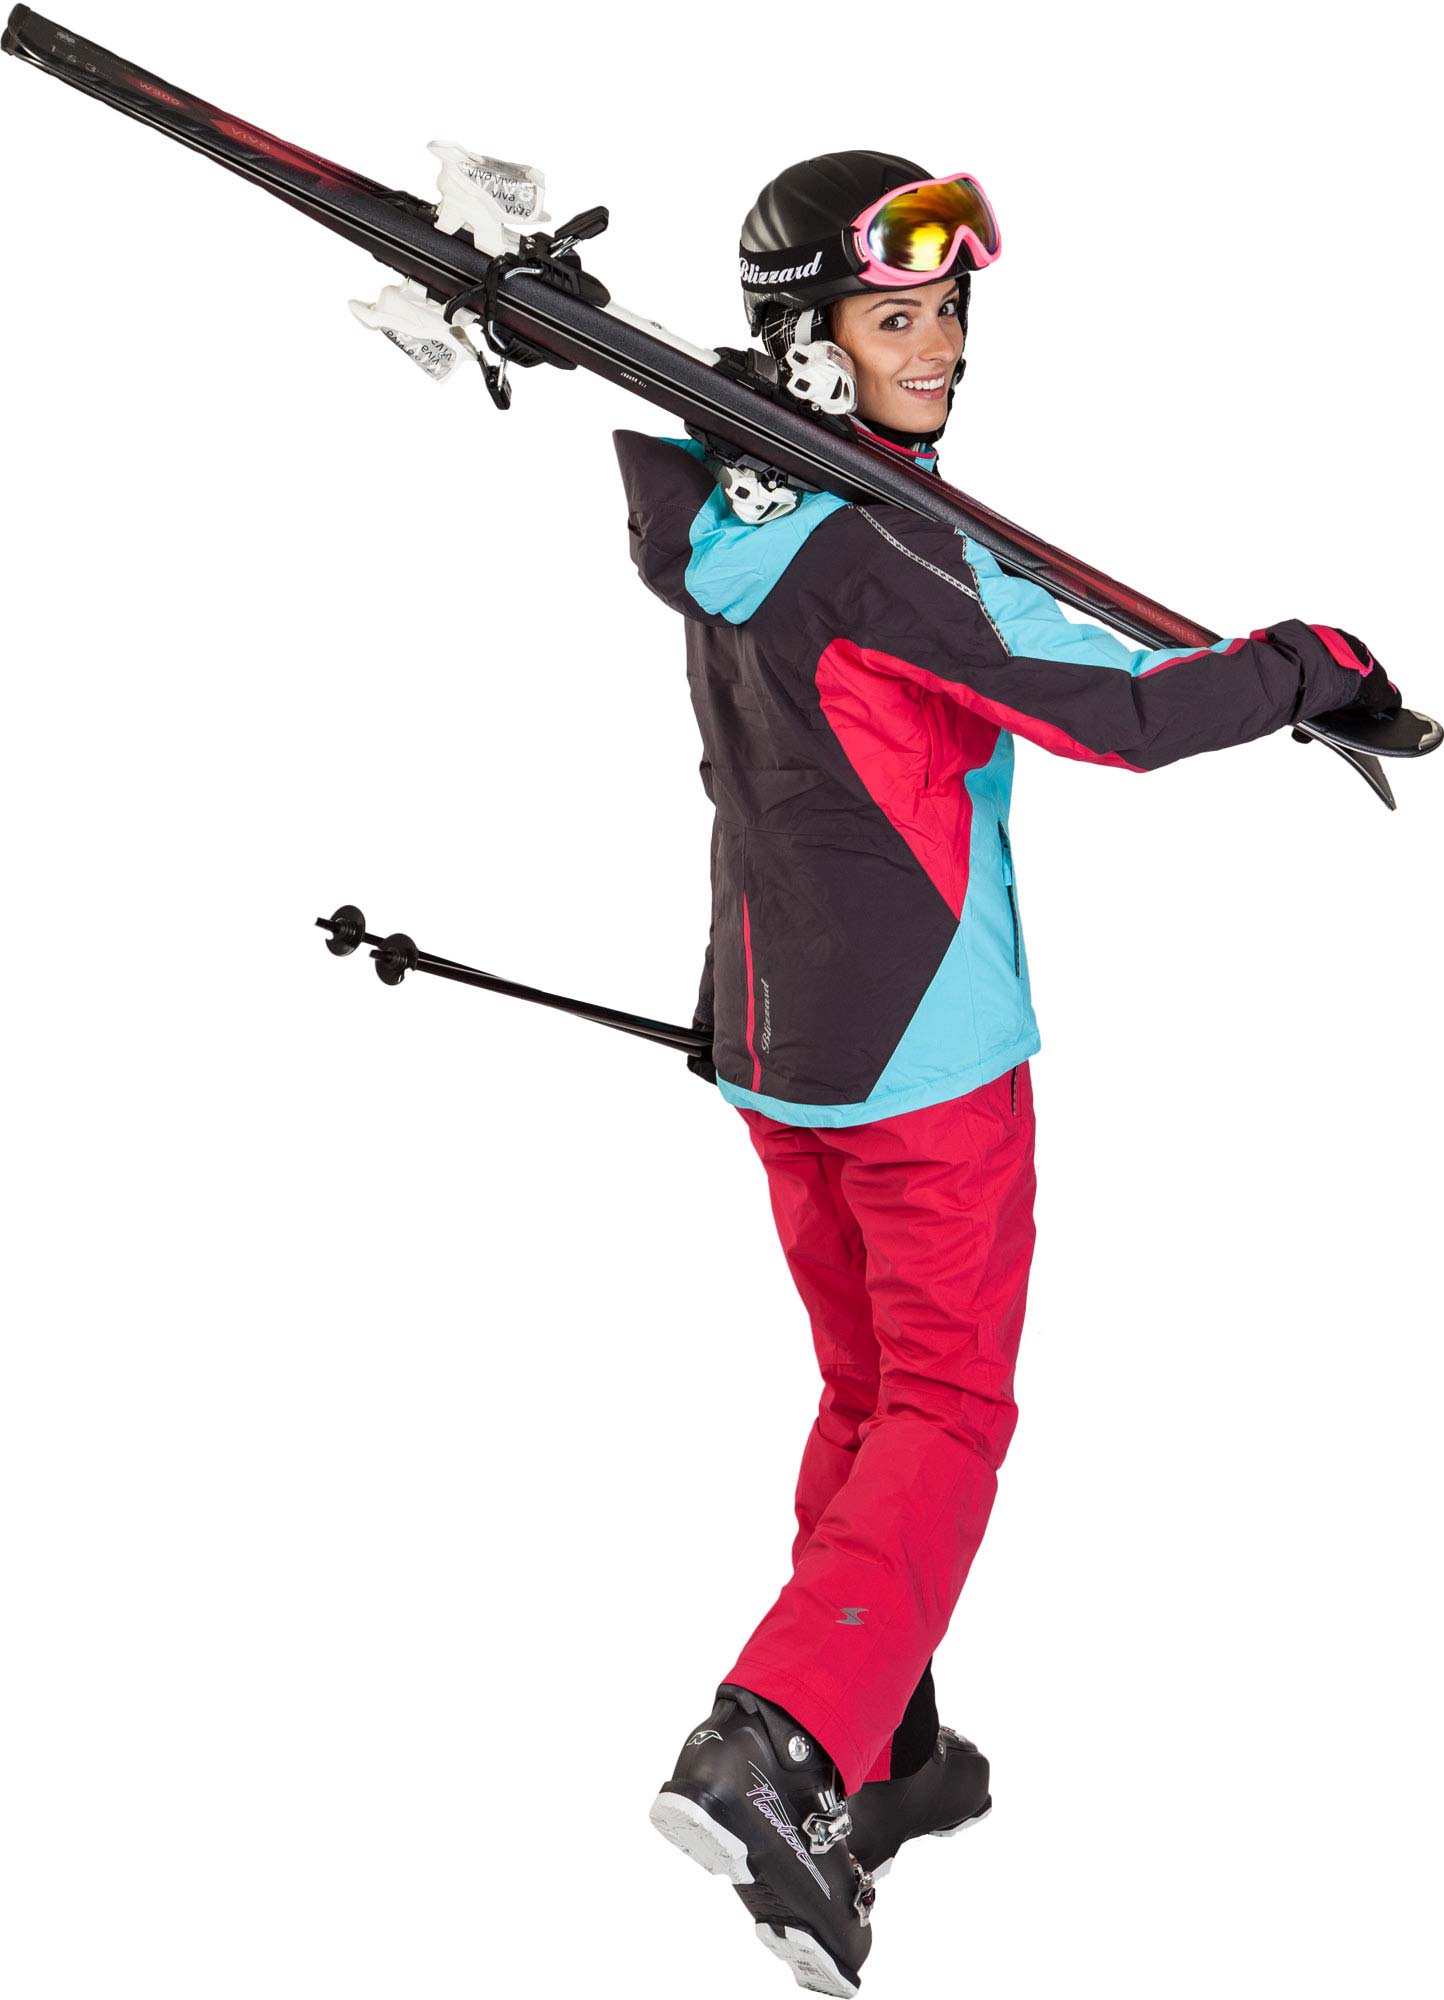 ESPRIT SKI JACKET - Women's Ski Jacket